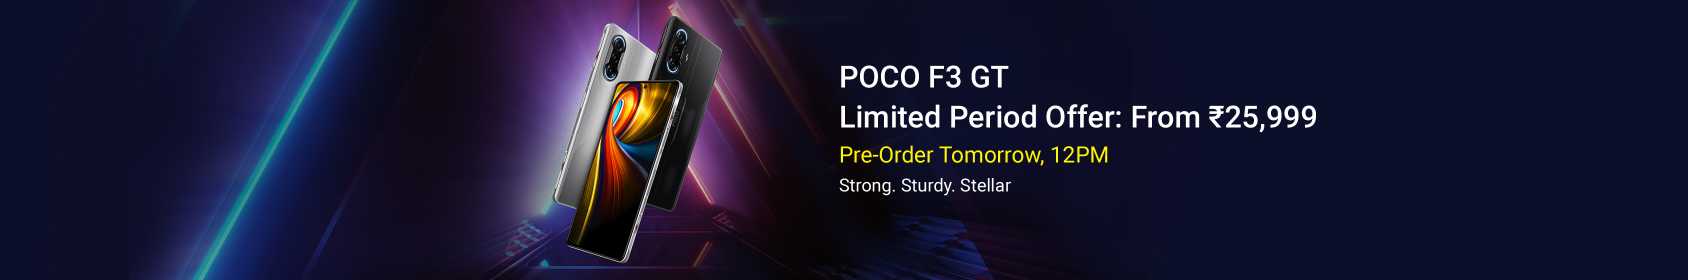 Poco-f3-preorder-tommrow.